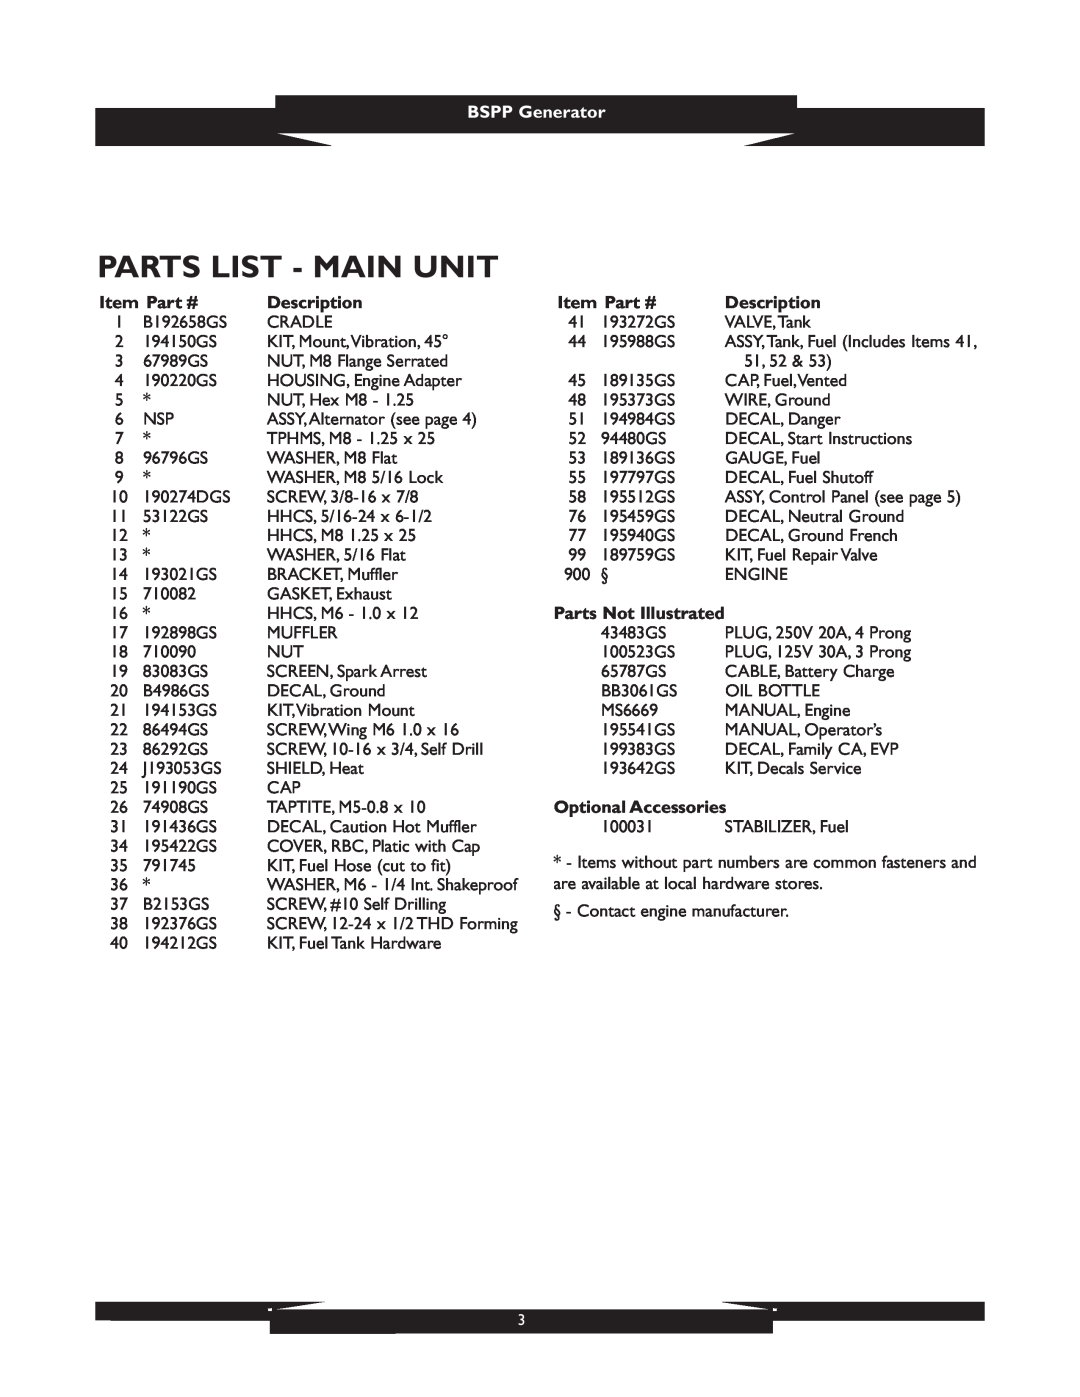 Briggs & Stratton 01933 Parts List - Main Unit, Description, Parts Not Illustrated, Optional Accessories, BSPP Generator 